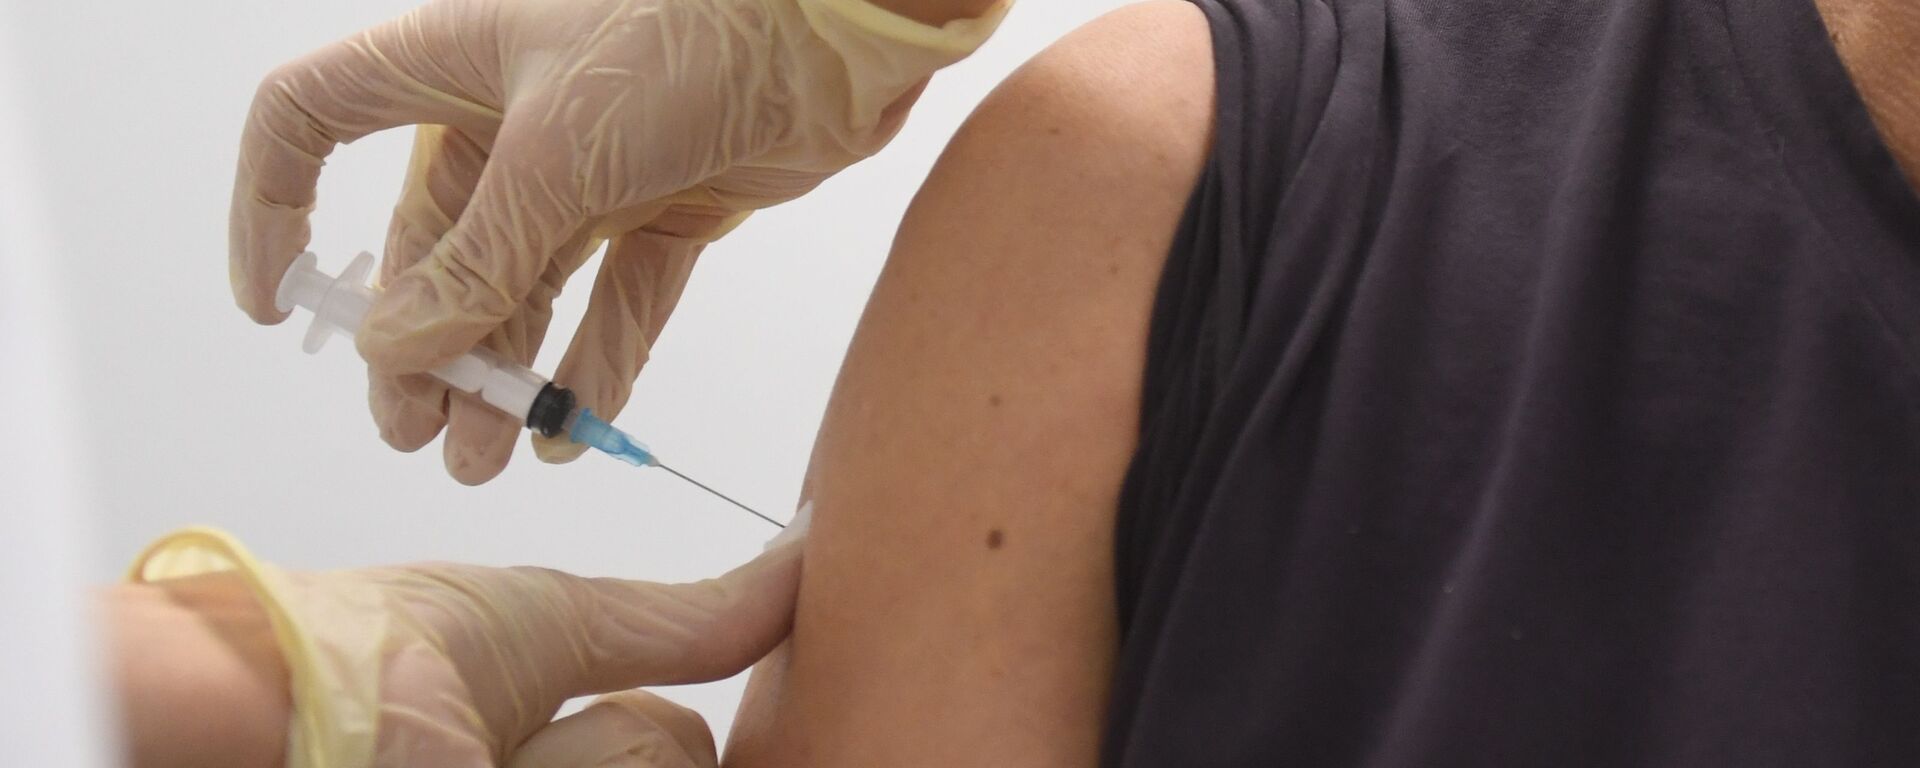 Мужчина вакцинируется против COVID-19 - Sputnik Ўзбекистон, 1920, 16.10.2021